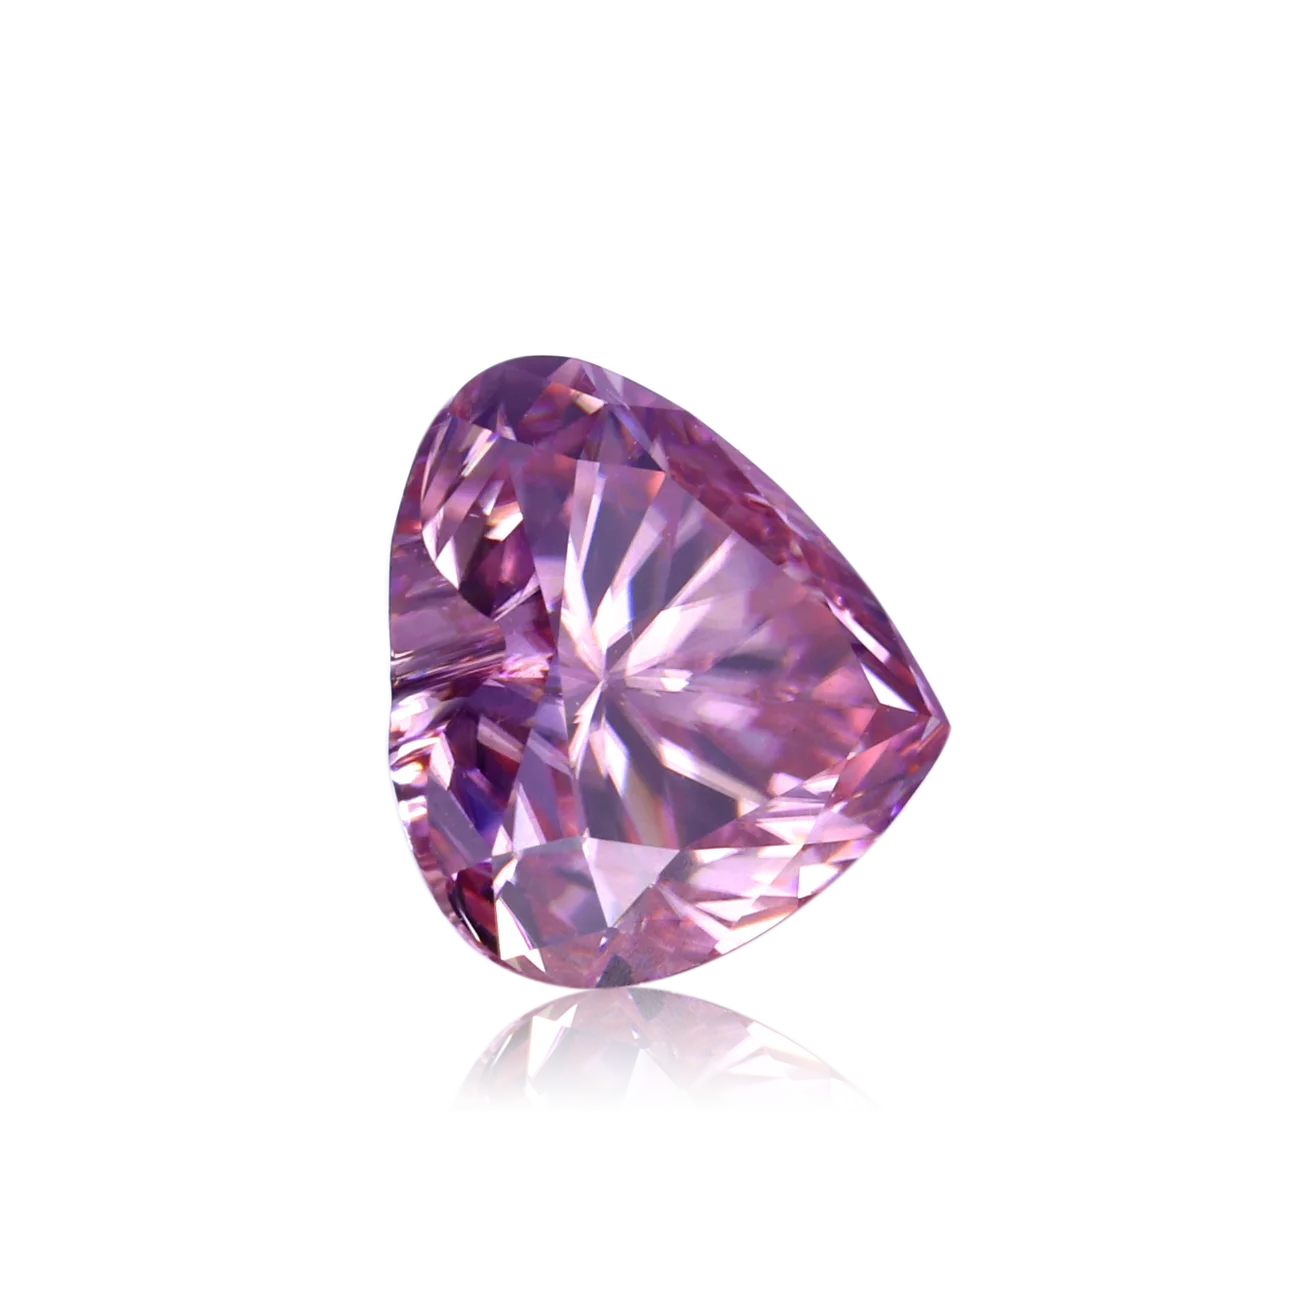 

Anster 2021 Wholesale price per carat pink heart shape diamond 3EX vvs moissanite diamond loose gemstone